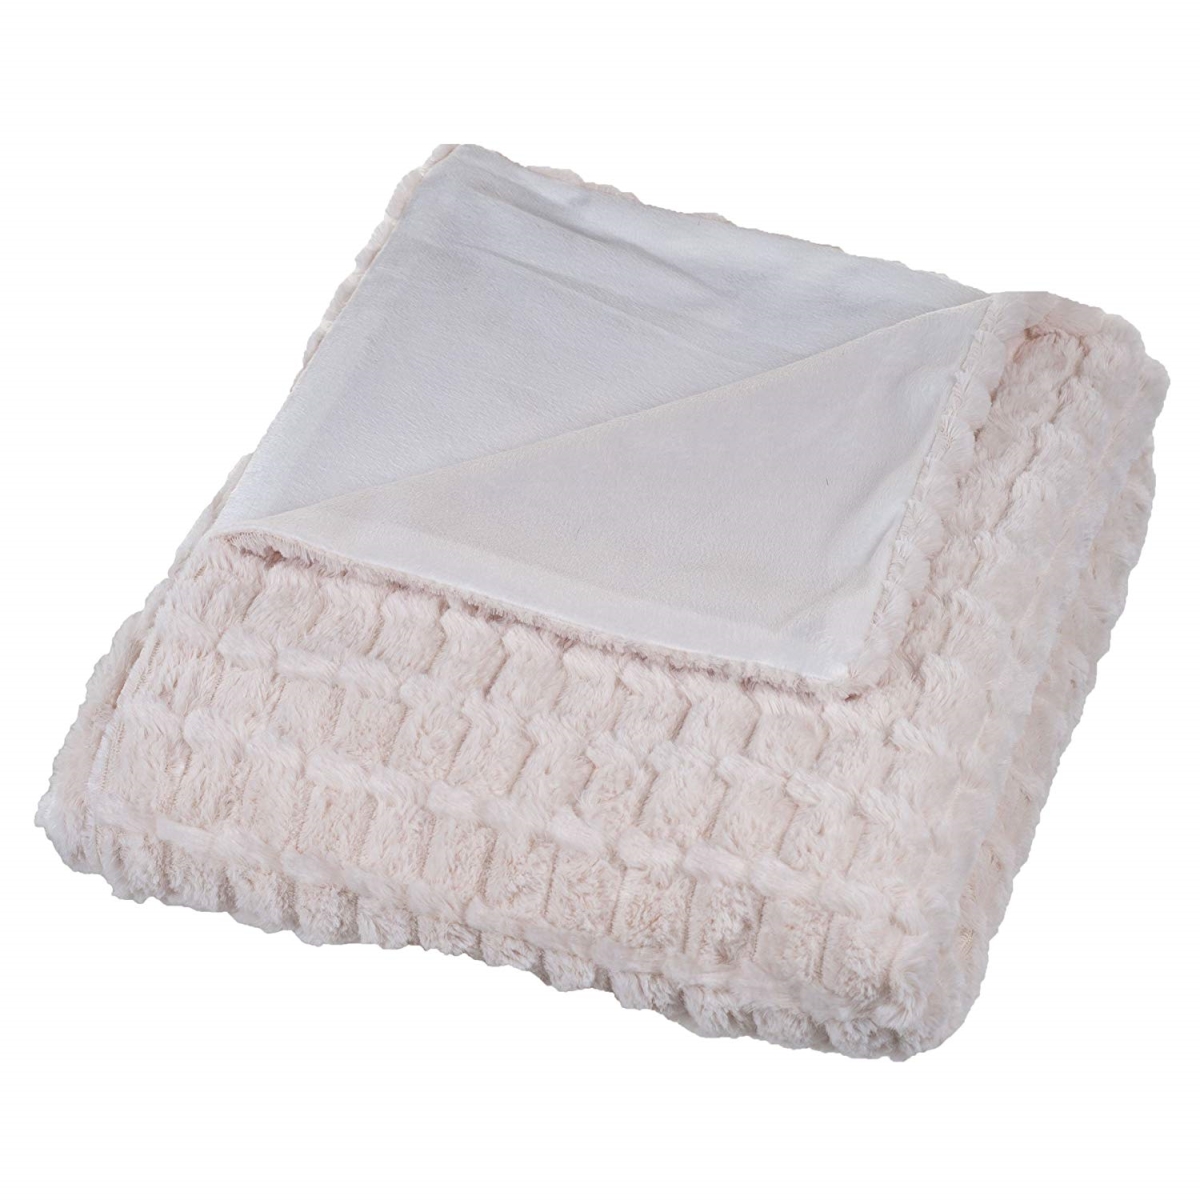 61a-26577 Plush Striped Embossed Faux Fur Mink Throw Blanket, Beige